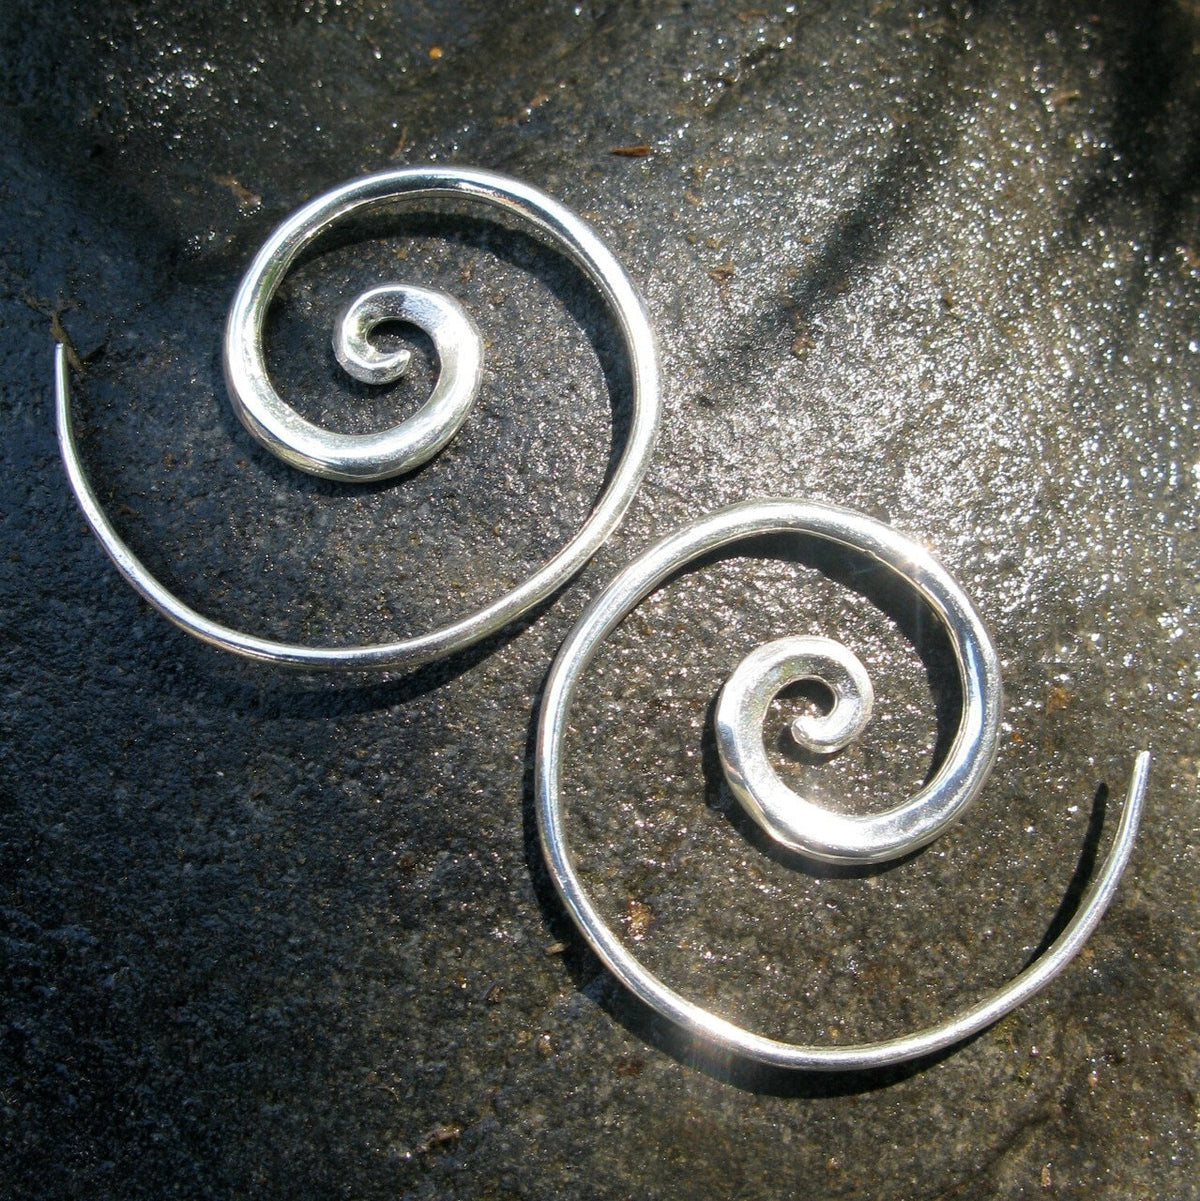 Solid Sterling Silver Spiral Earrings - Minimalist Jewelry (036S)